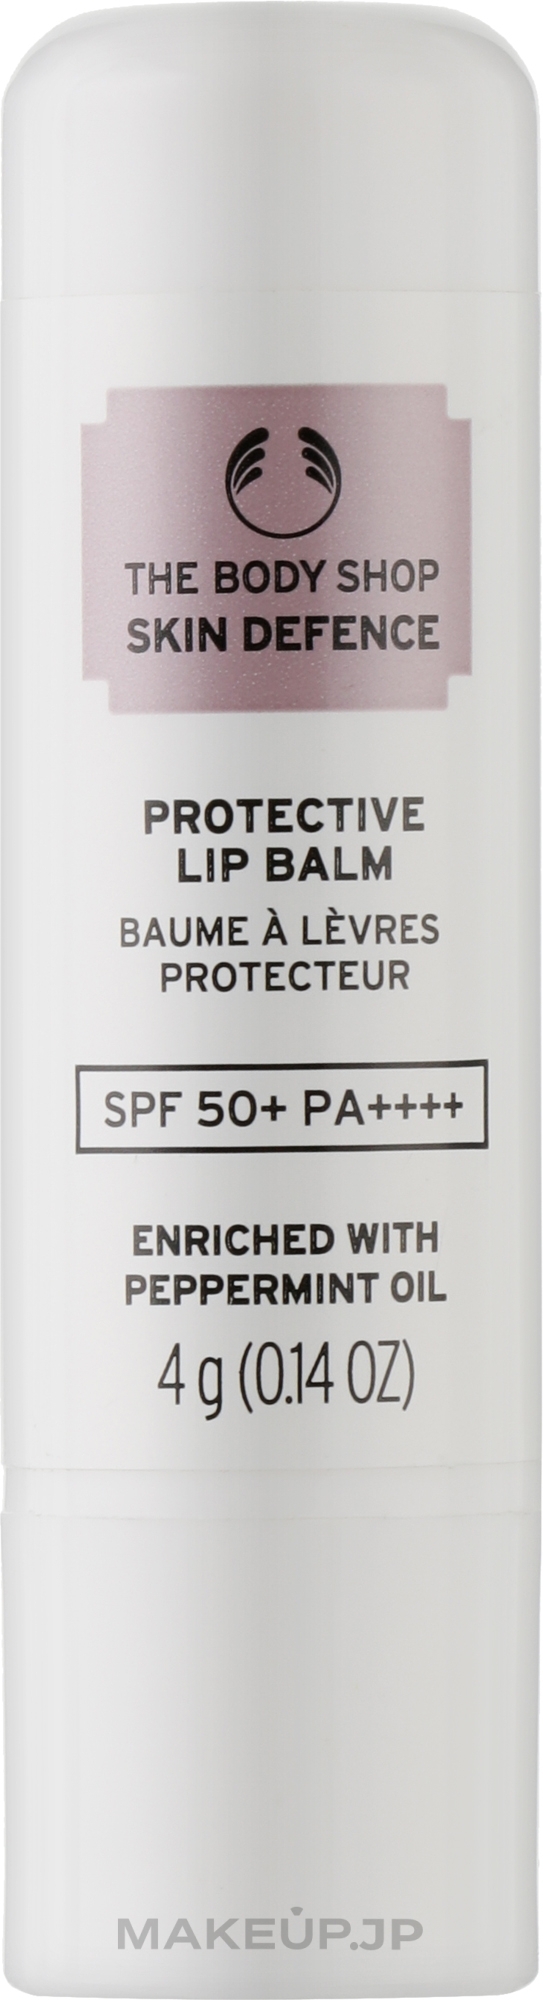 Protective Lip Balm SPF50+ - The Body Shop Skin Defence Protective Lip Balm — photo 4 g